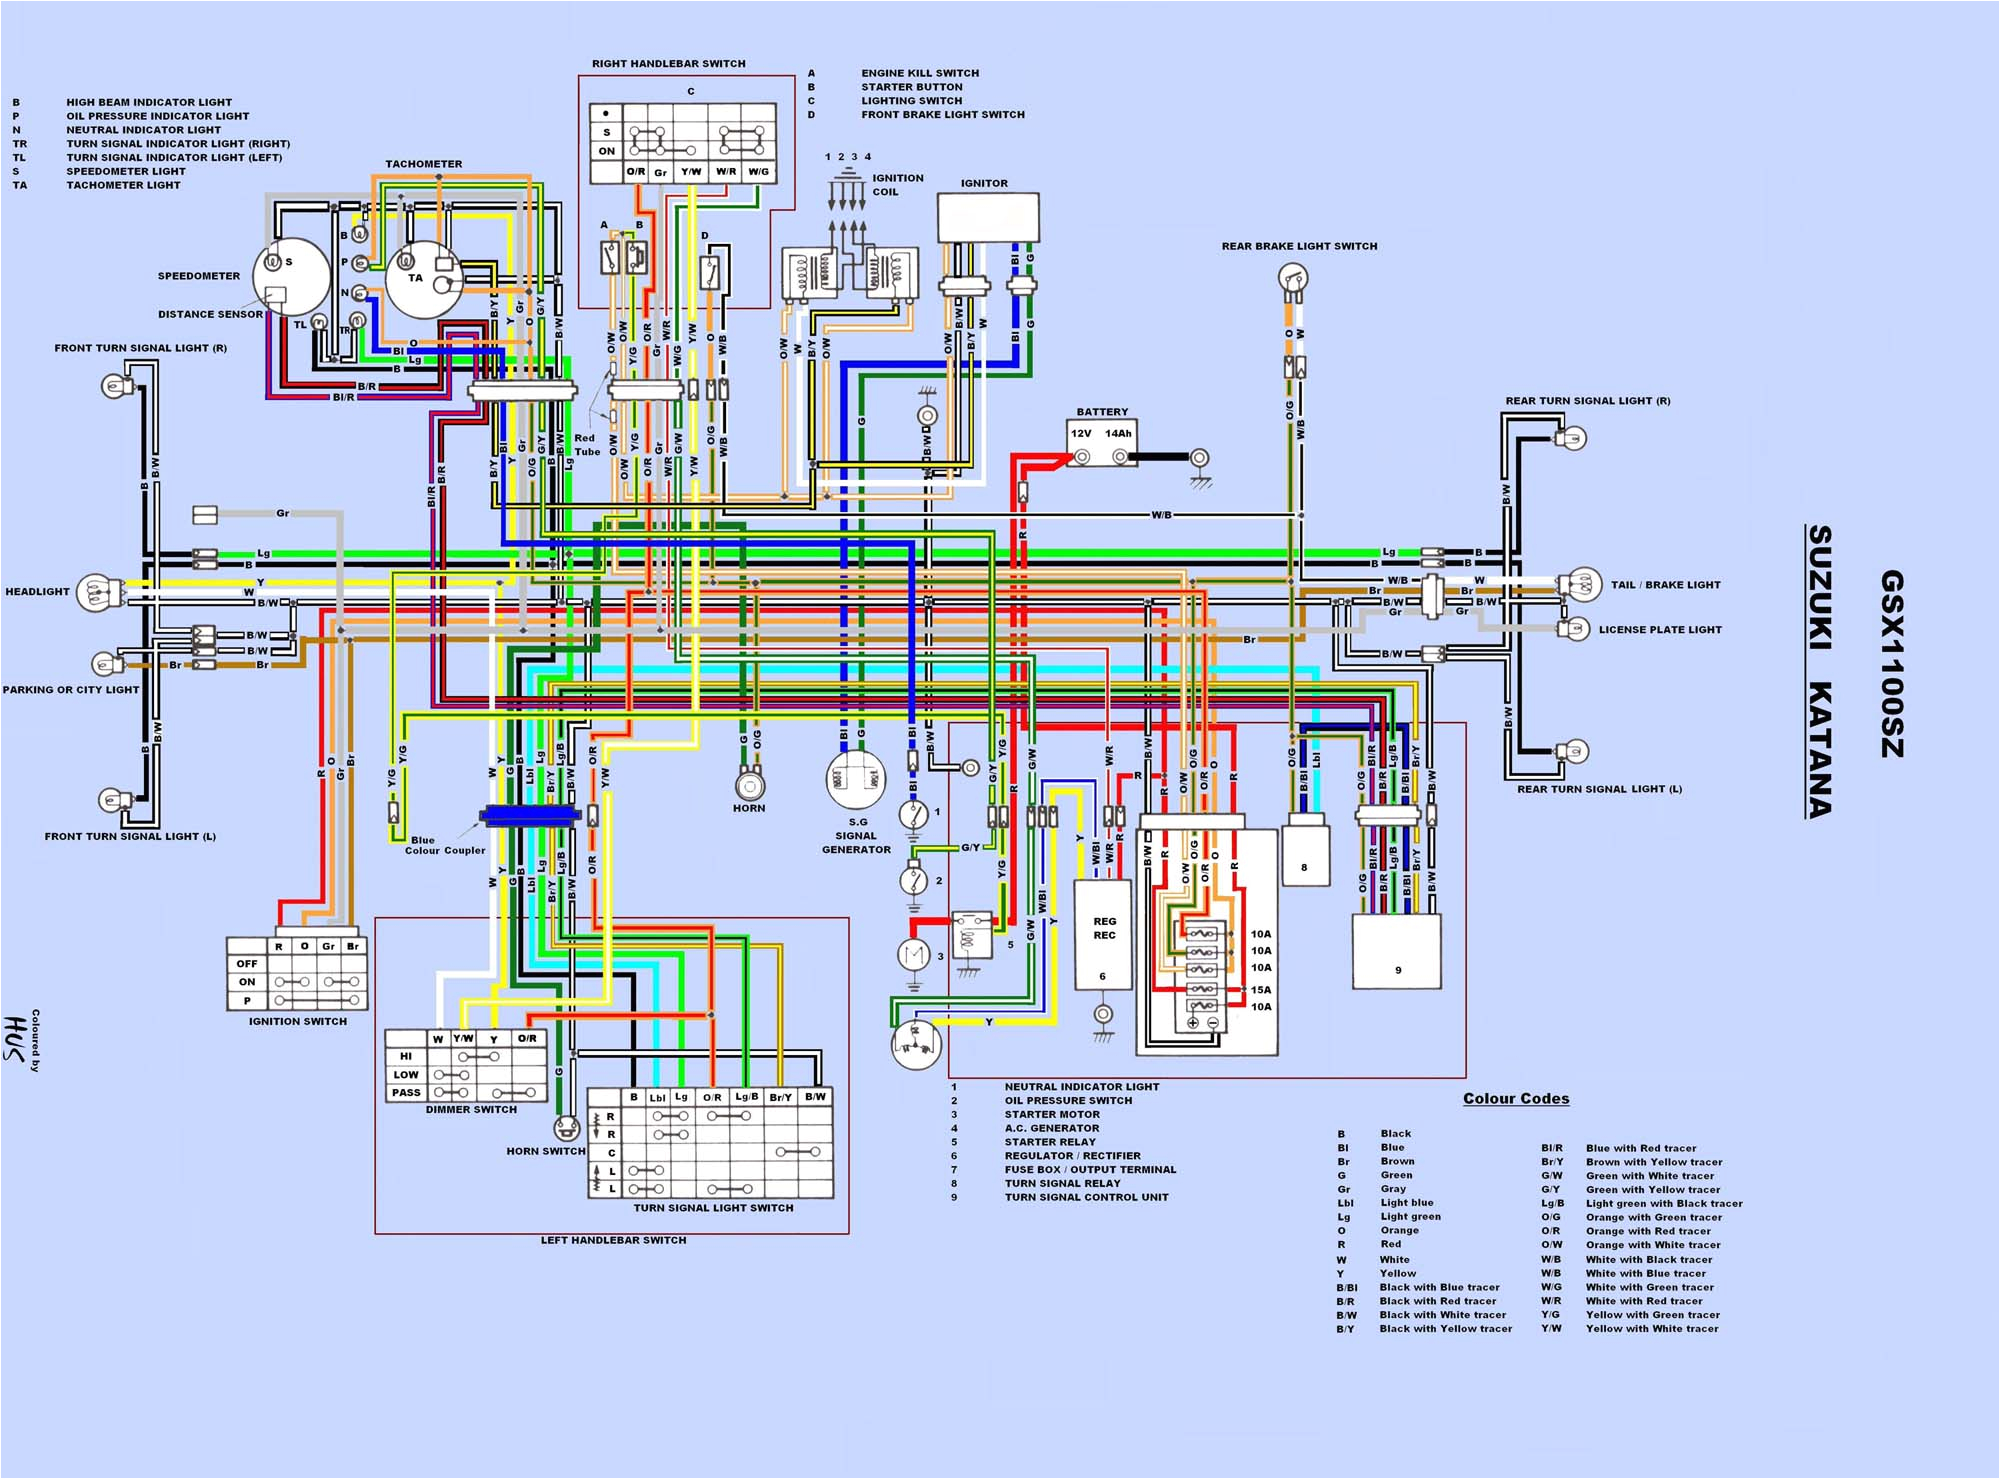 vl800 suzuki motorcycle wiring diagrams wiring diagrams longwiring diagram suzuki volusia schematic diagram database suzuki vl800